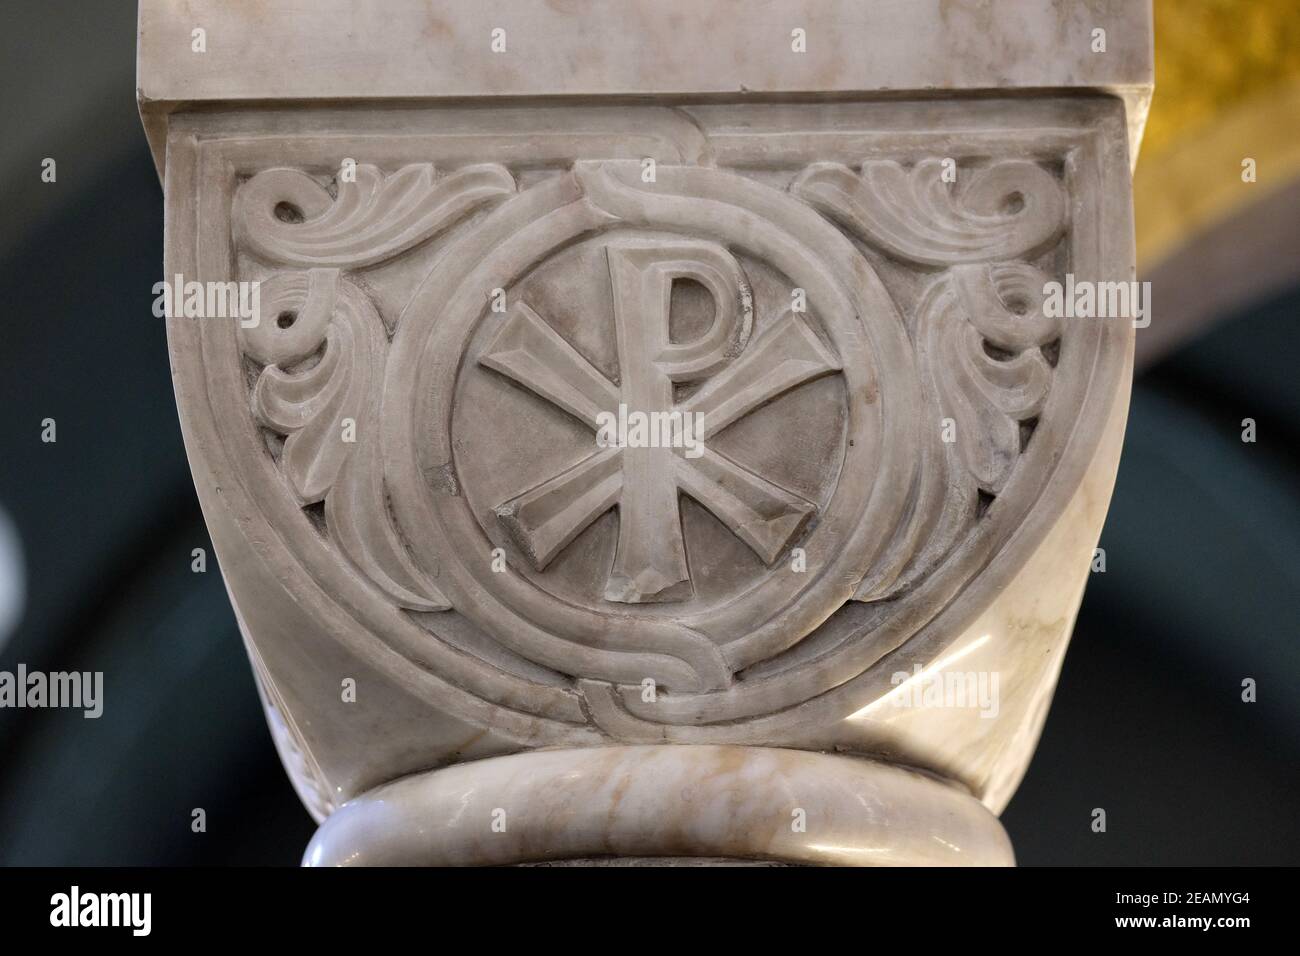 Pax symbol on a pillar in the church of Saint Blaise in Zagreb, Croatia Stock Photo